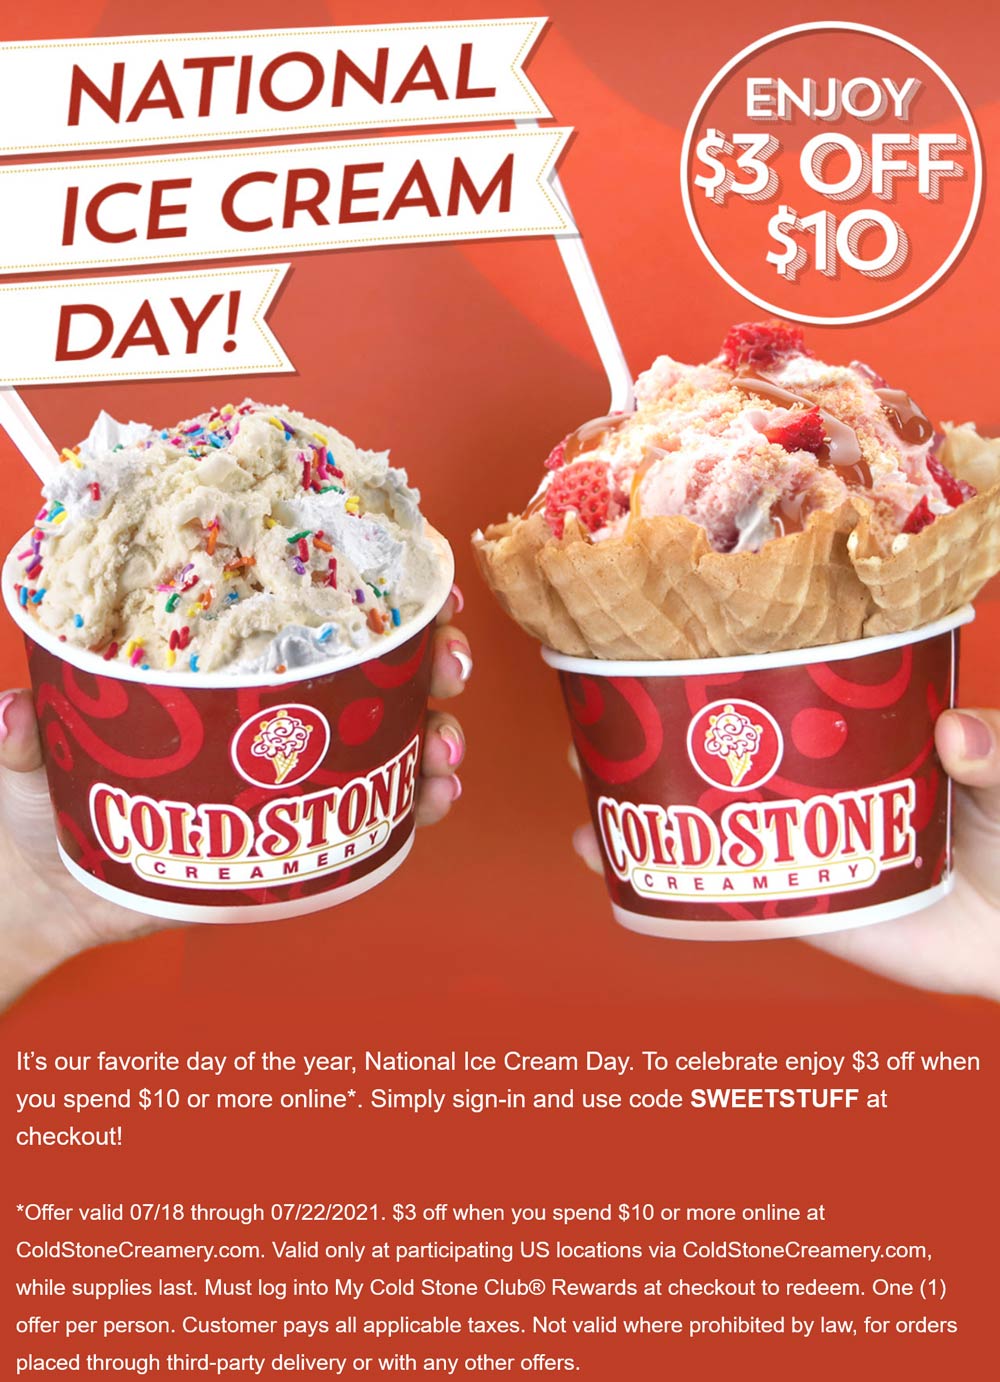 Cold Stone Creamery restaurants Coupon  $3 off $10 at Cold Stone Creamery ice cream via promo code SWEETSTUFF #coldstonecreamery 